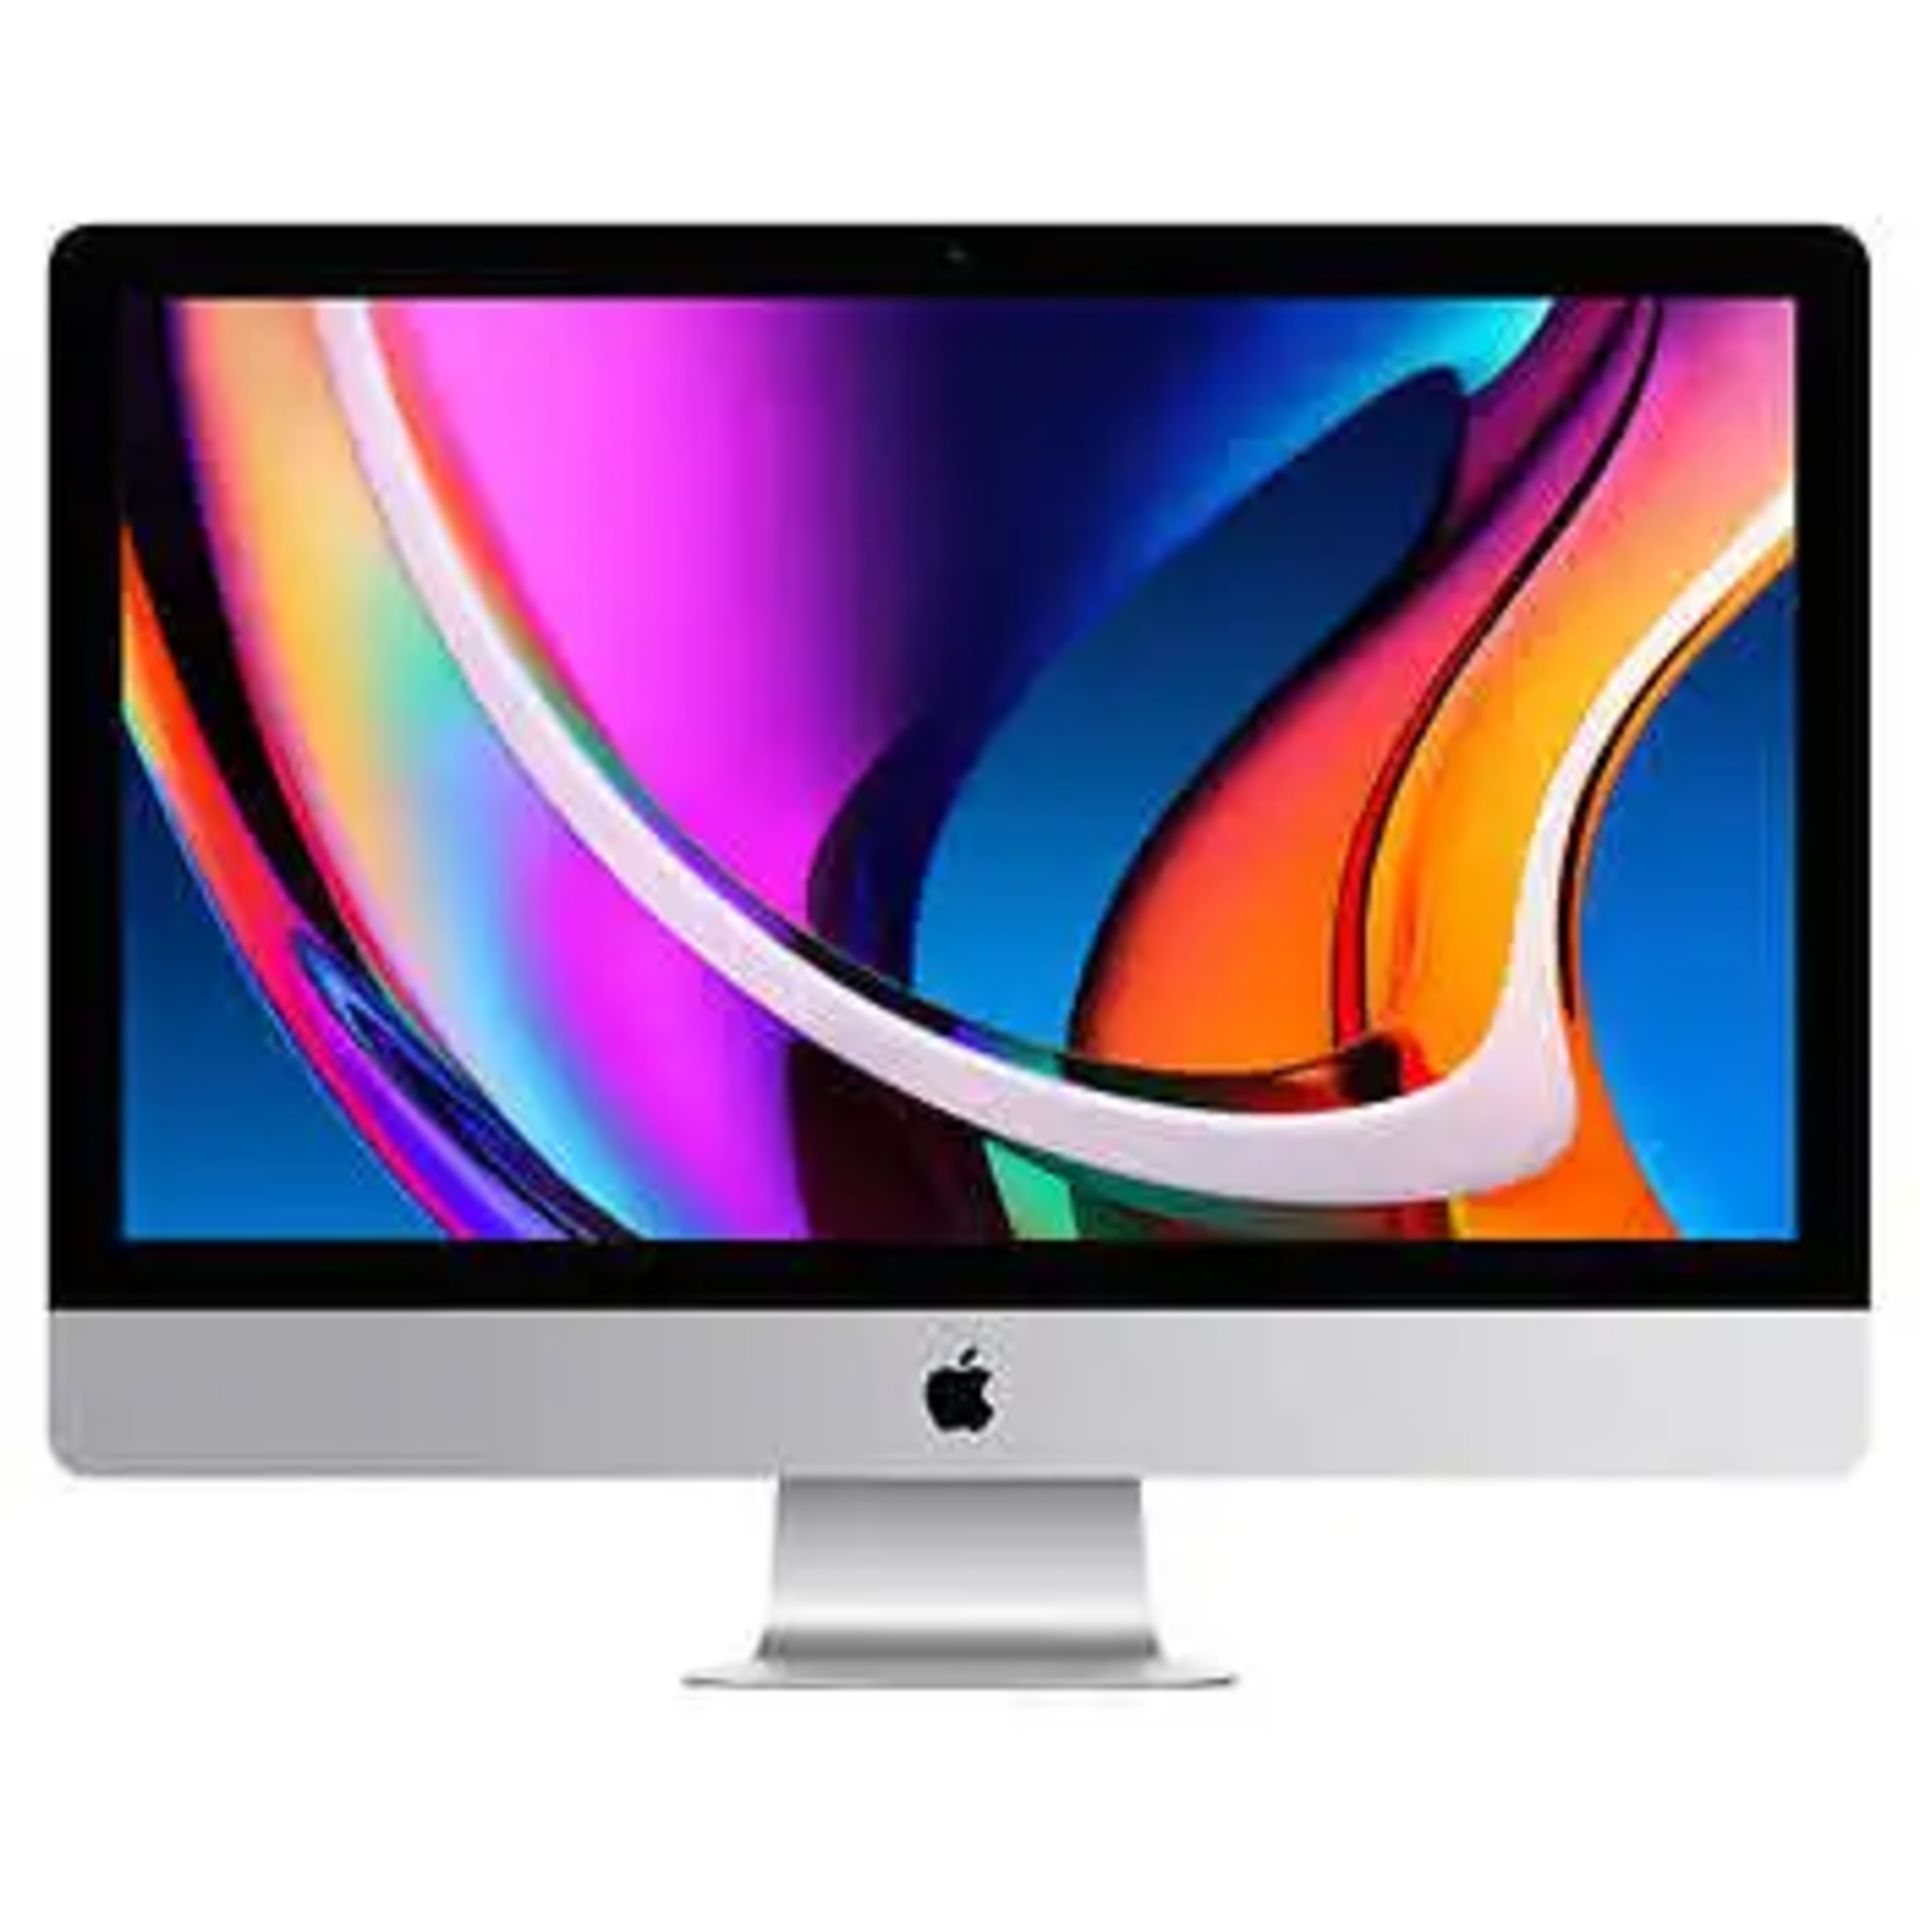 Apple iMac 21.5” A1418 Slim (2013) Intel Core i5 Quad Core 8GB Memory 1TB HD WiFi Office #23